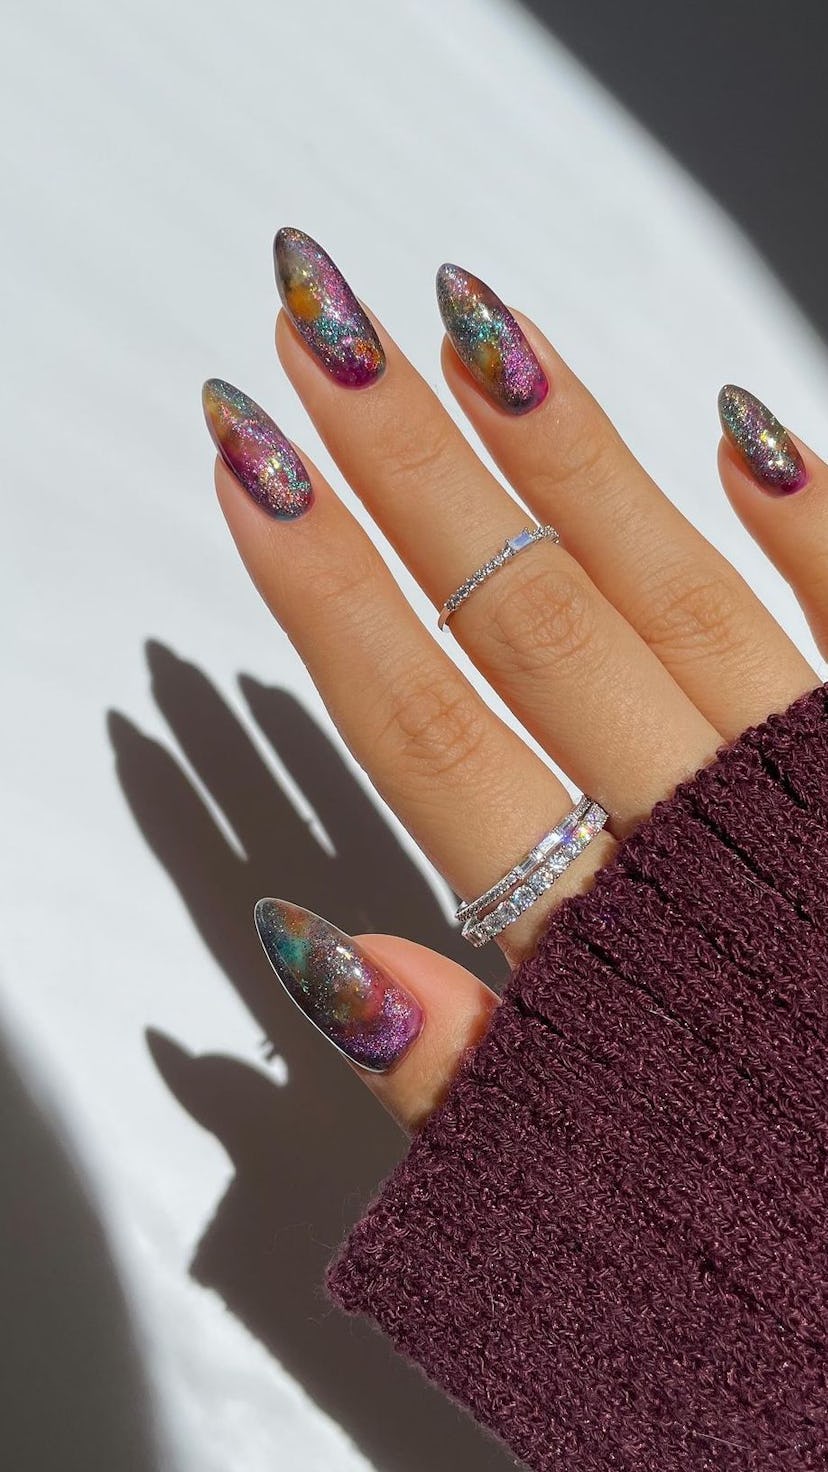 Try holographic glitter nail art for Aquarius season.